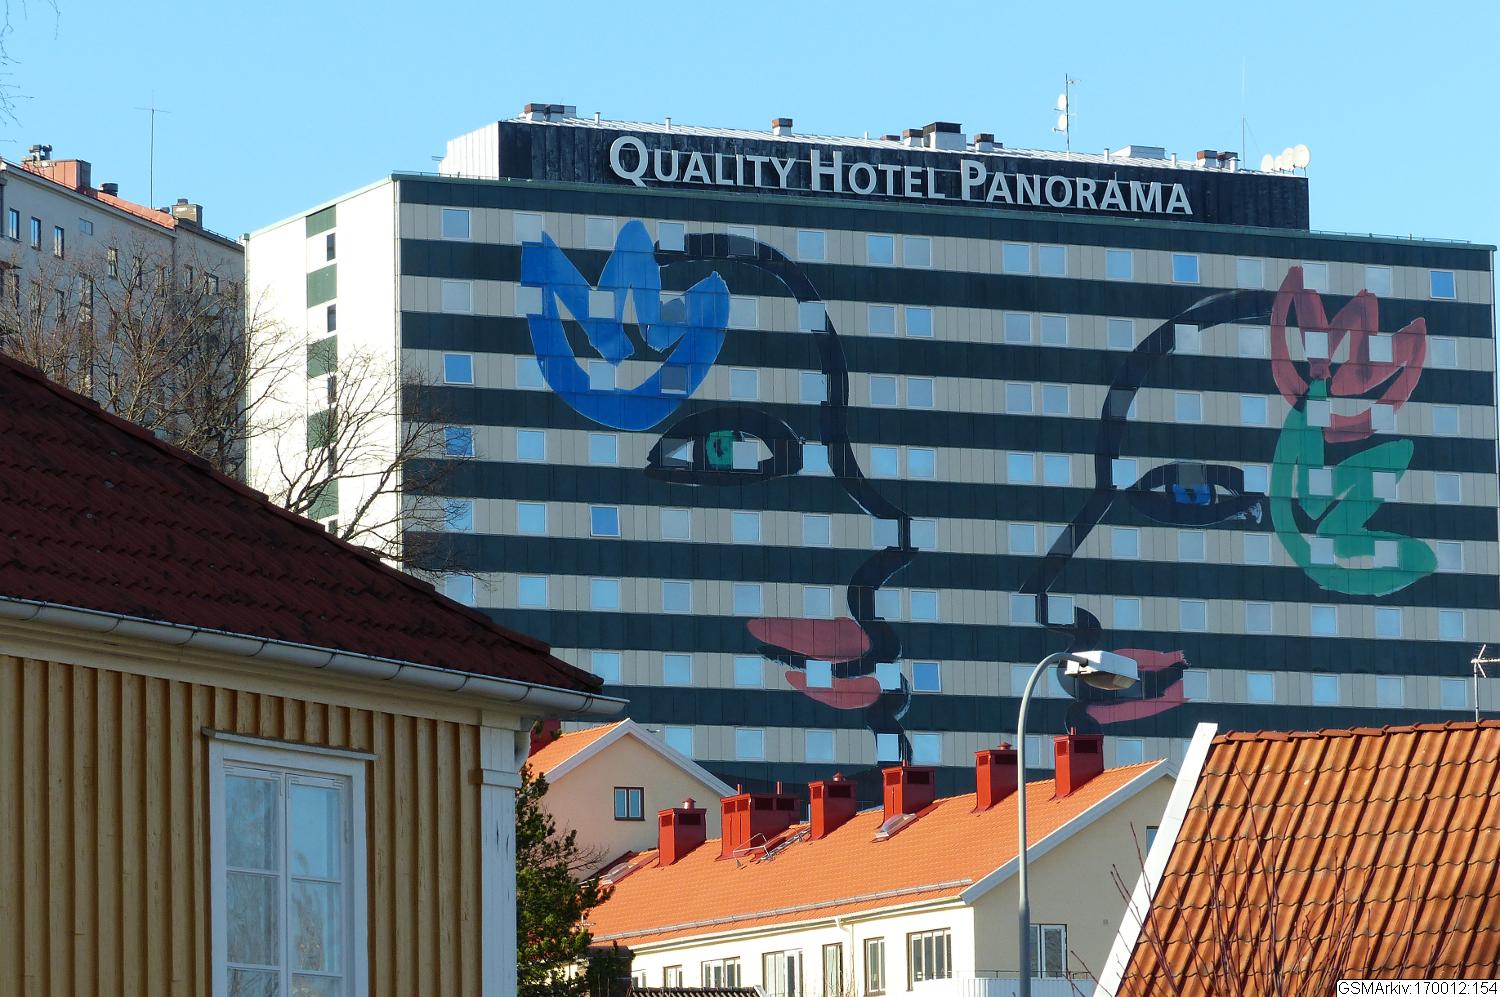 Hustak och hotellet QUALITY HOTEL PANORAMA i Johanneberg